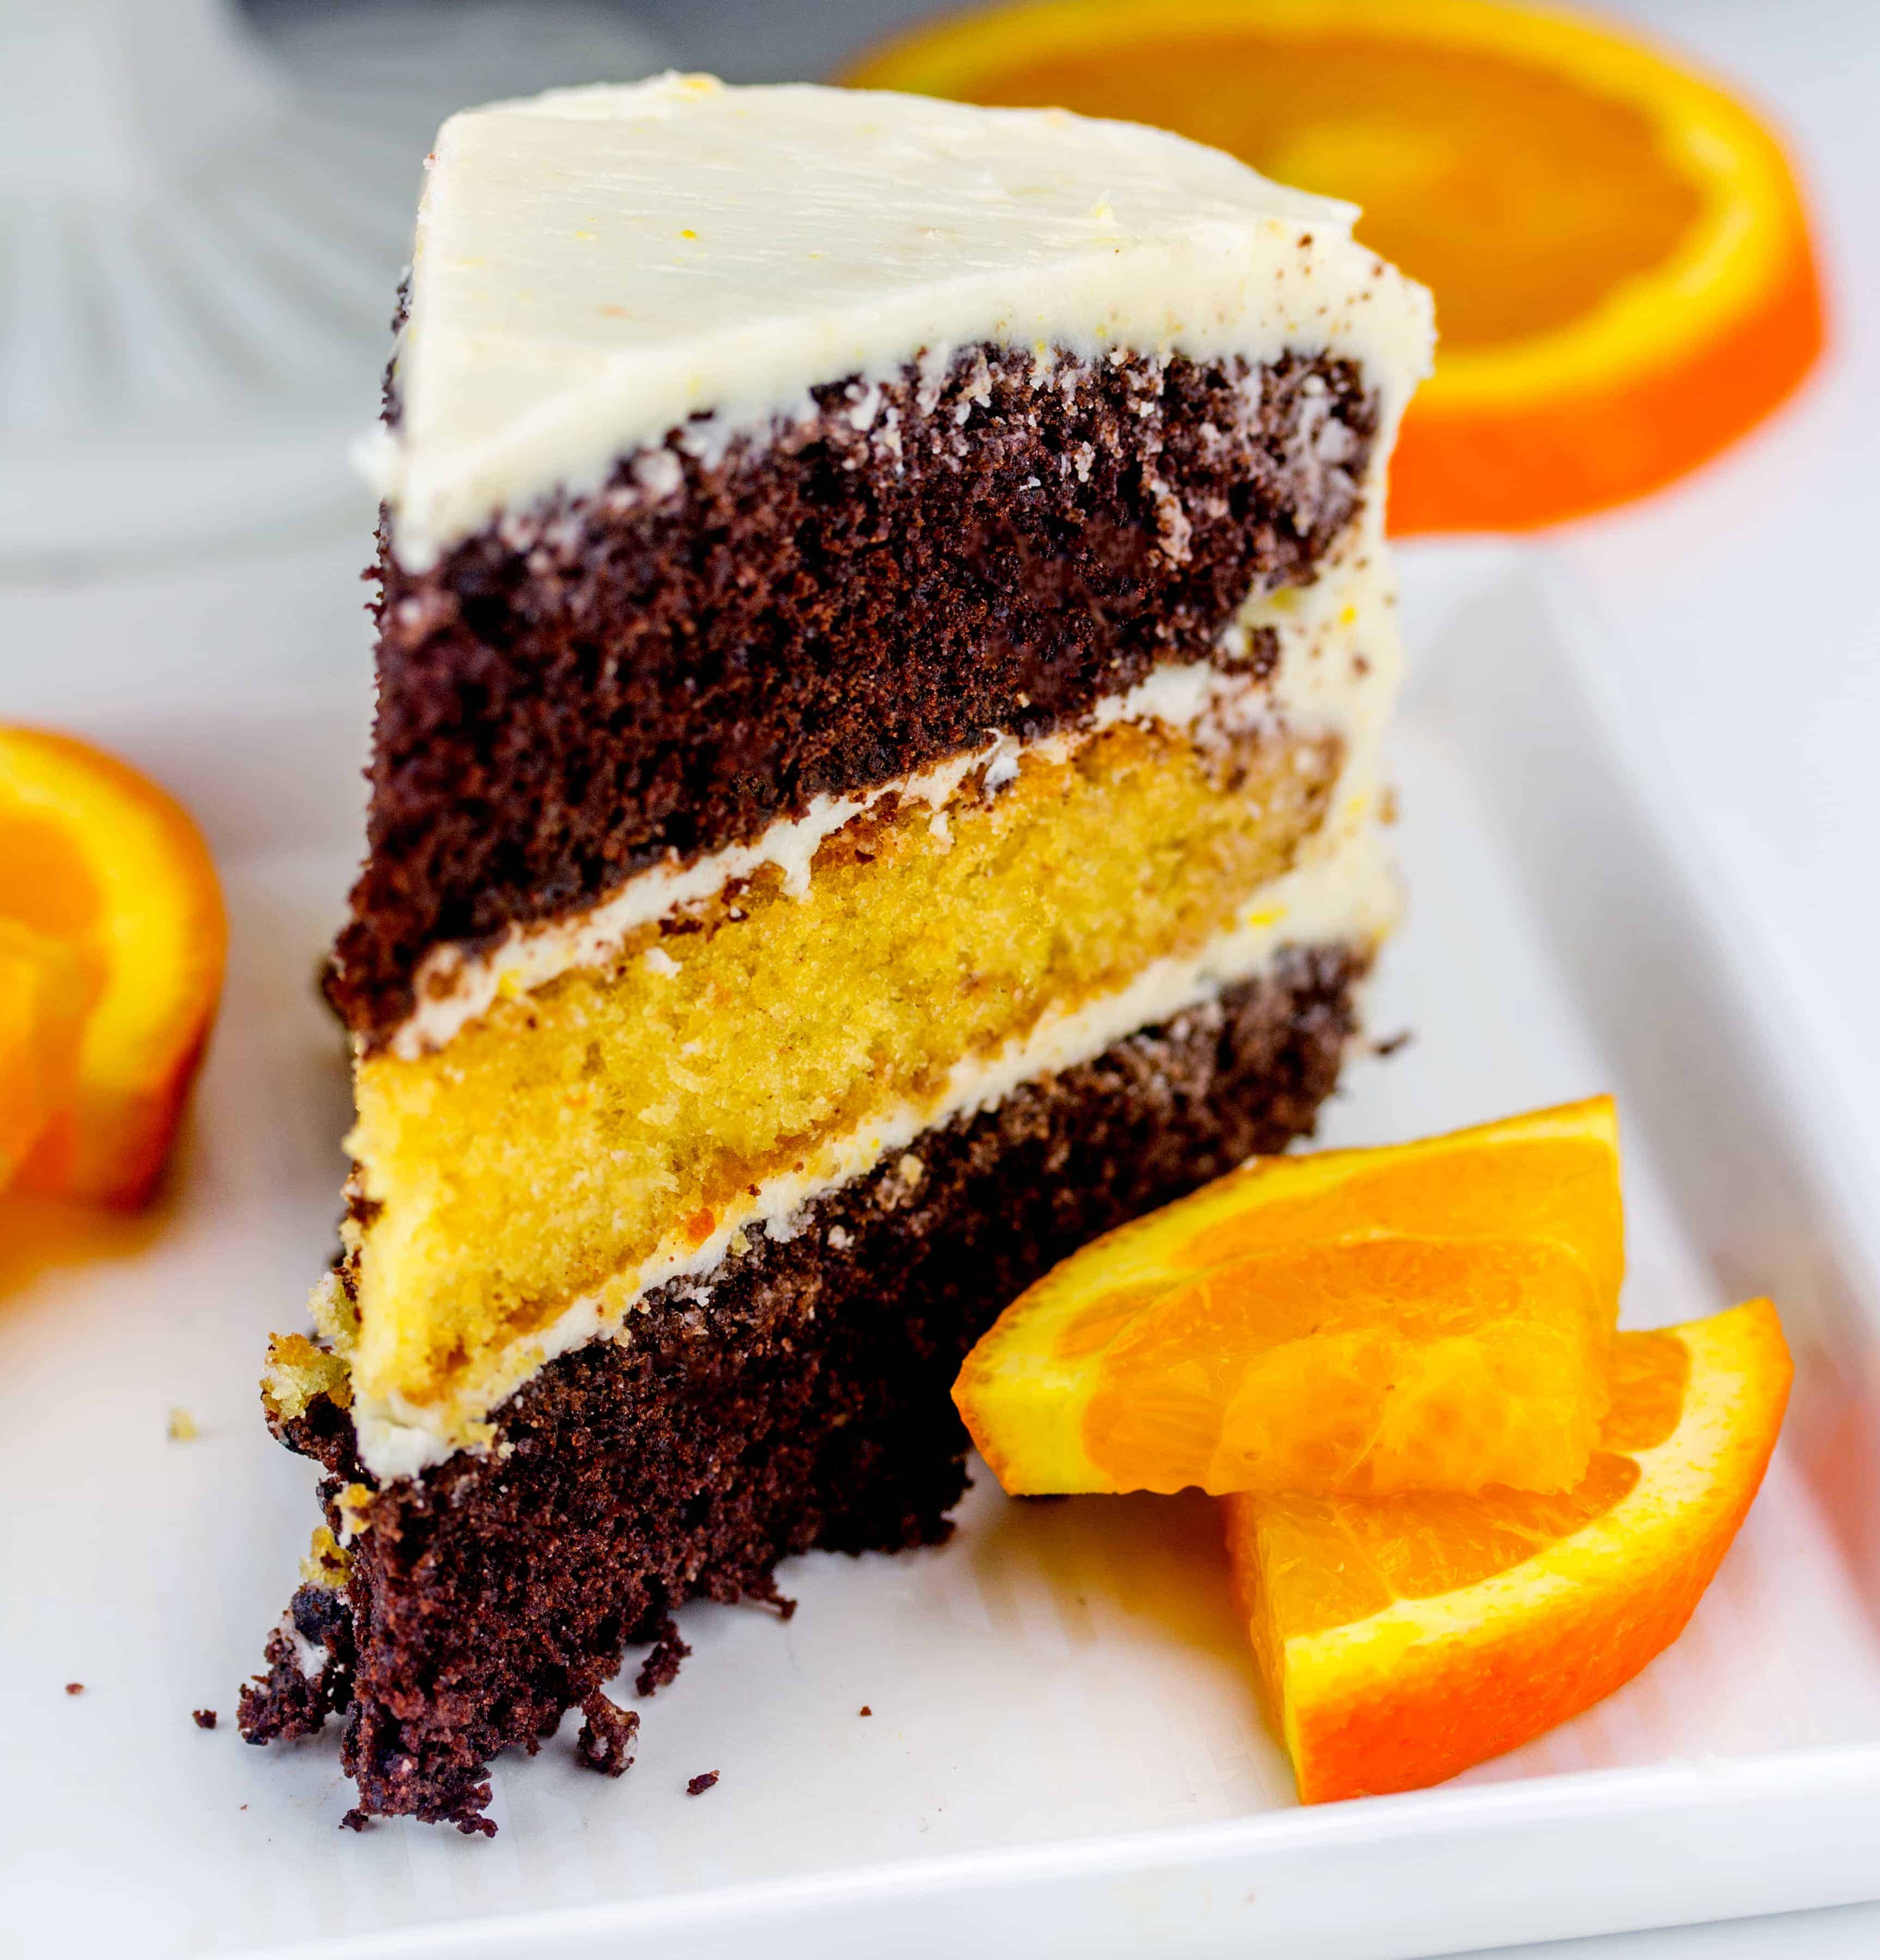 Chocolate and Orange Cake